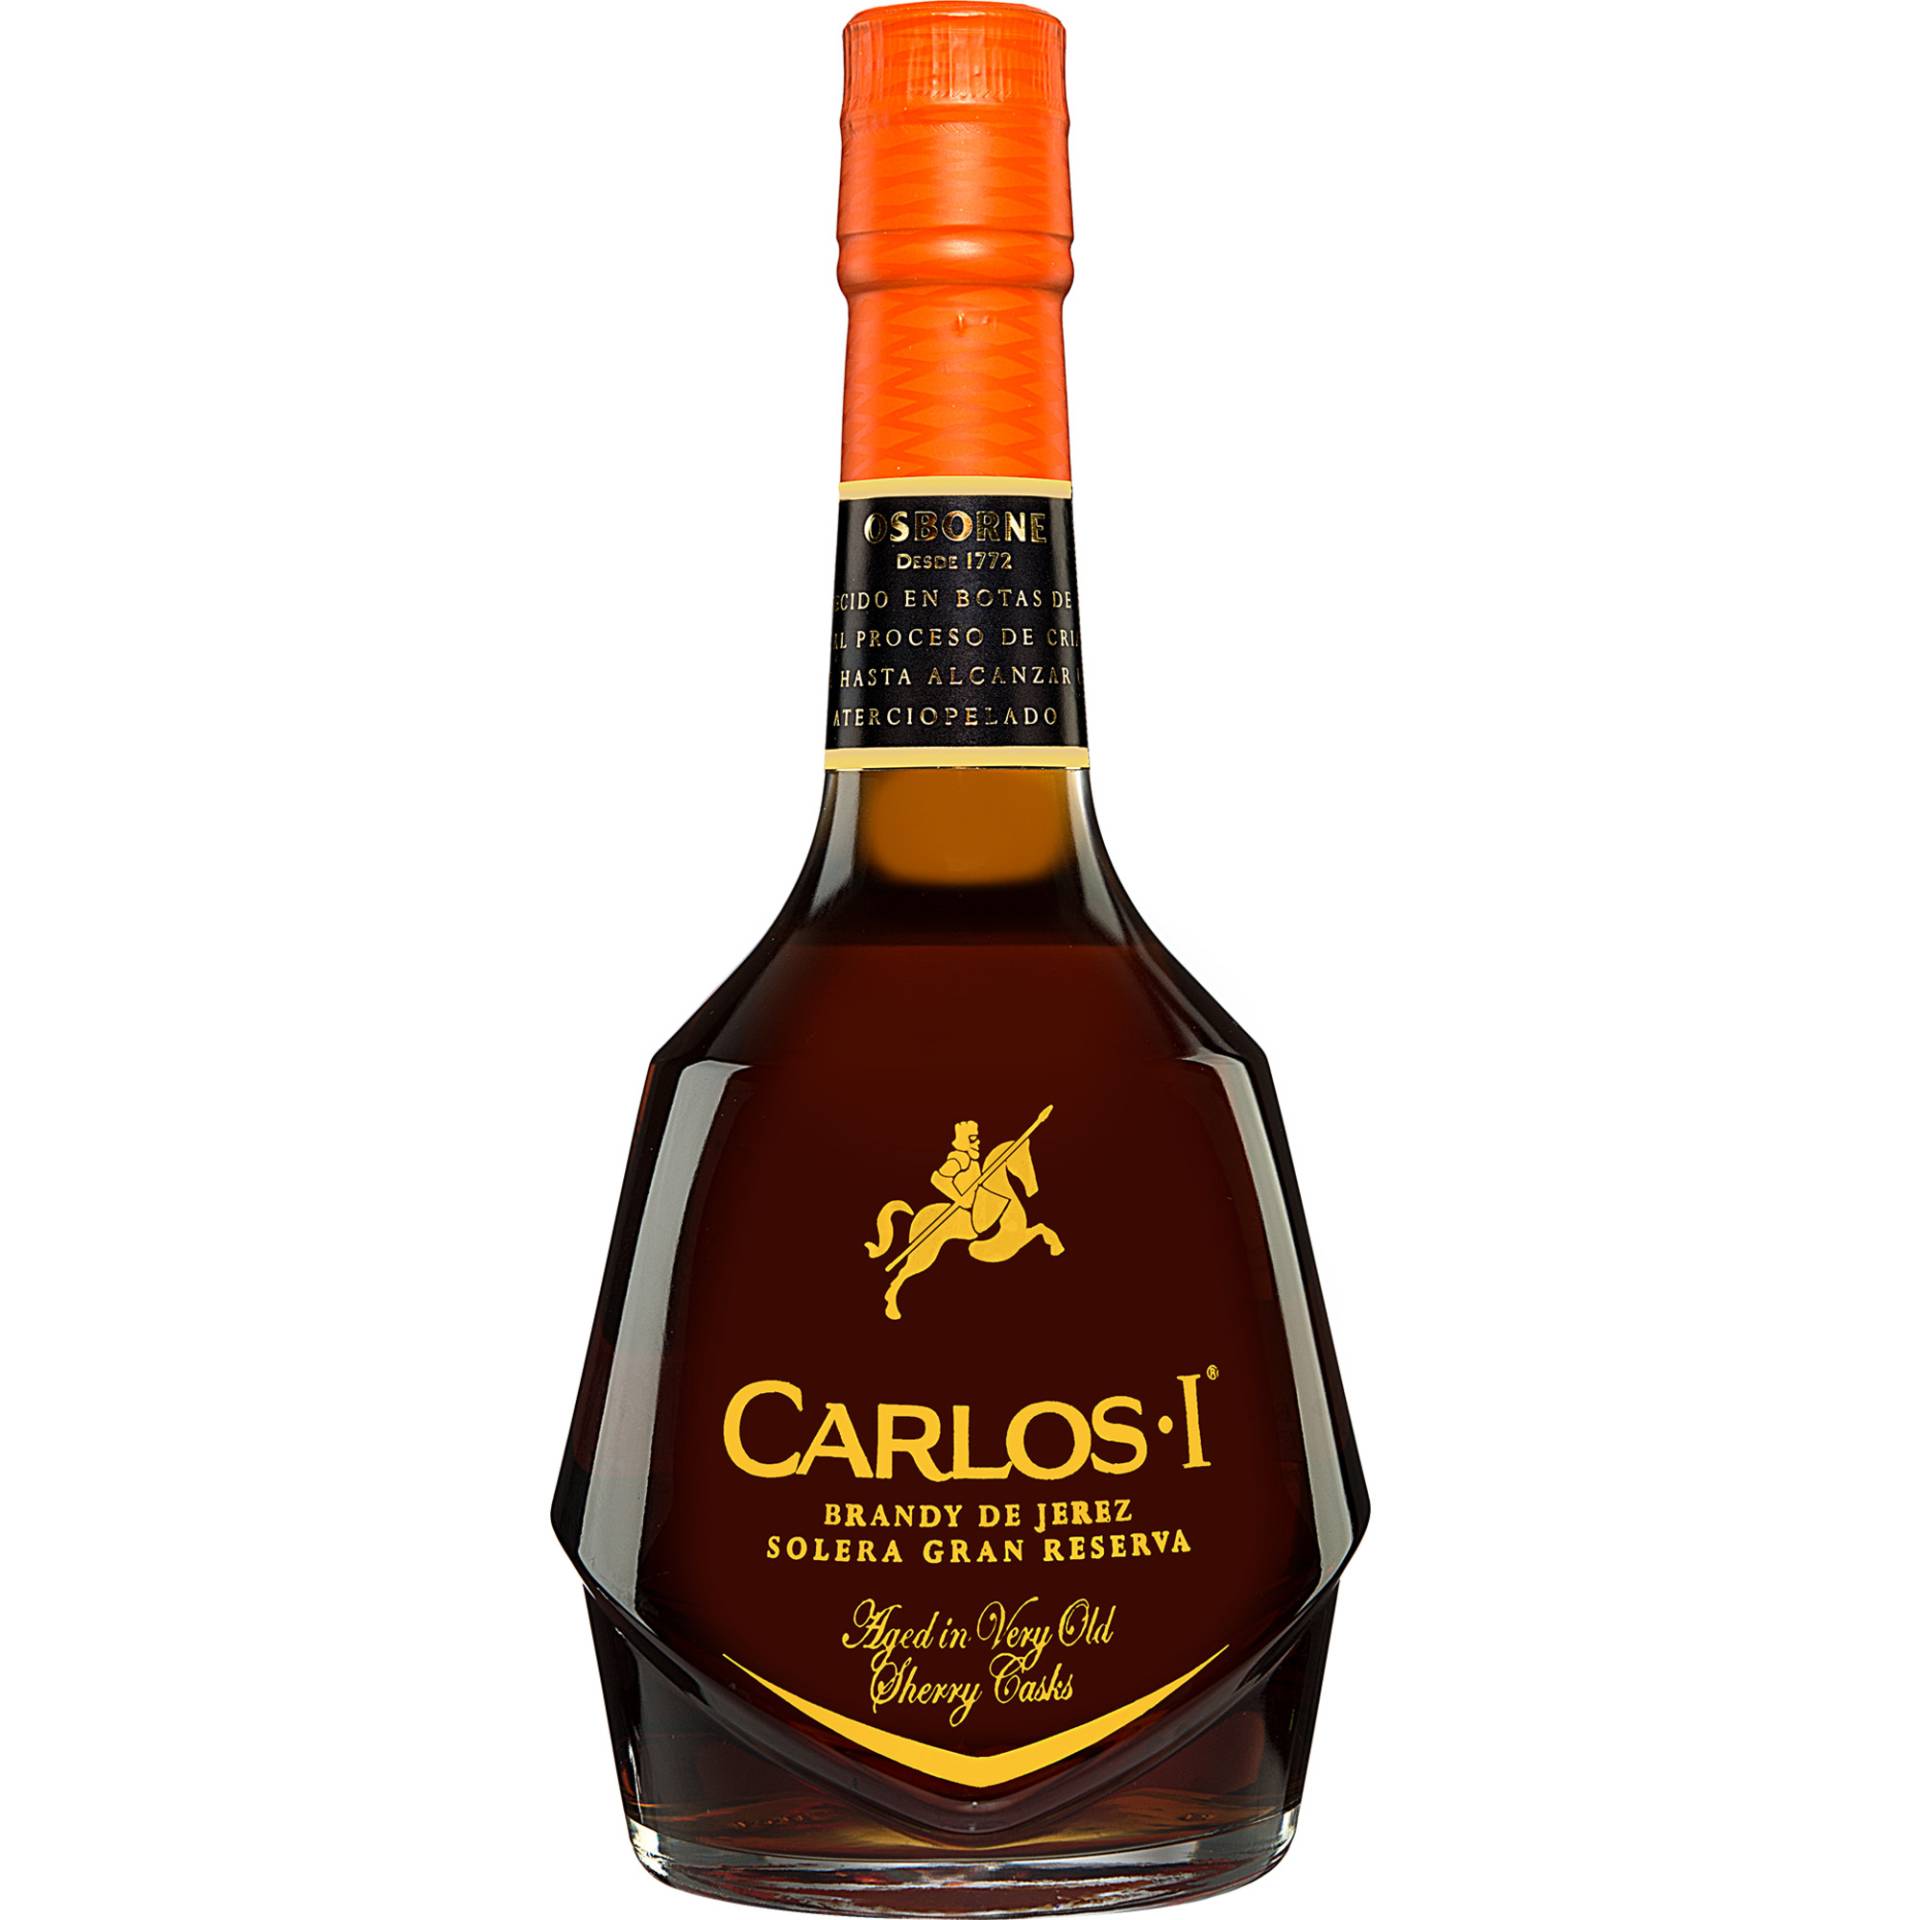 Brandy »Carlos I« Solera Gran Reserva - 0,7 L.  0.7L 40% Vol. Brandy aus Spanien von Osborne